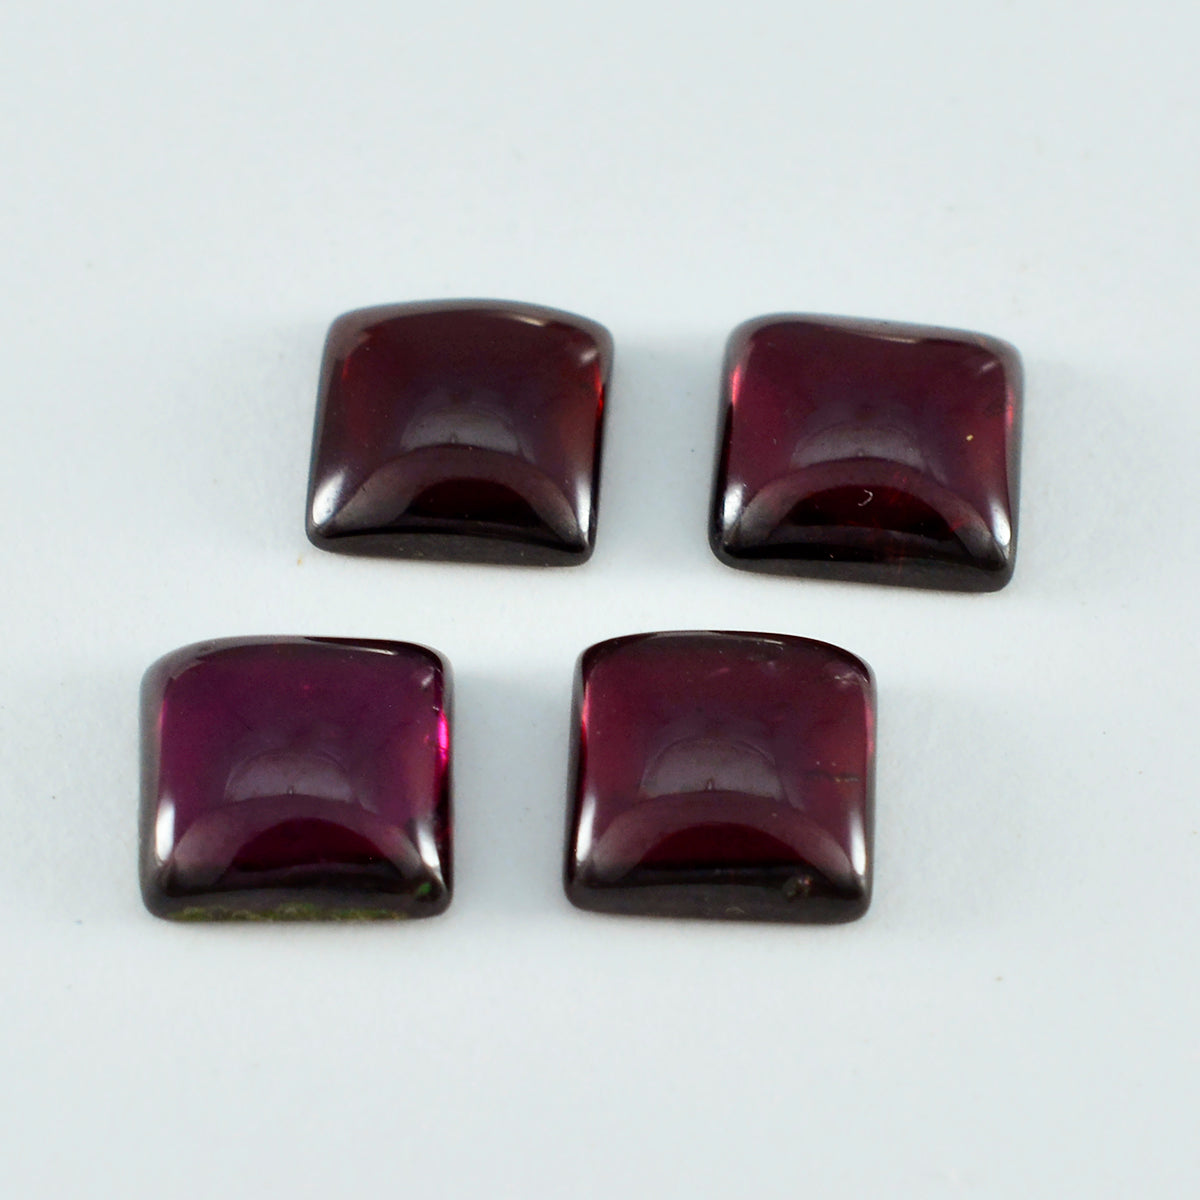 Riyogems 1PC Red Garnet Cabochon 14x14 mm Square Shape startling Quality Loose Gems